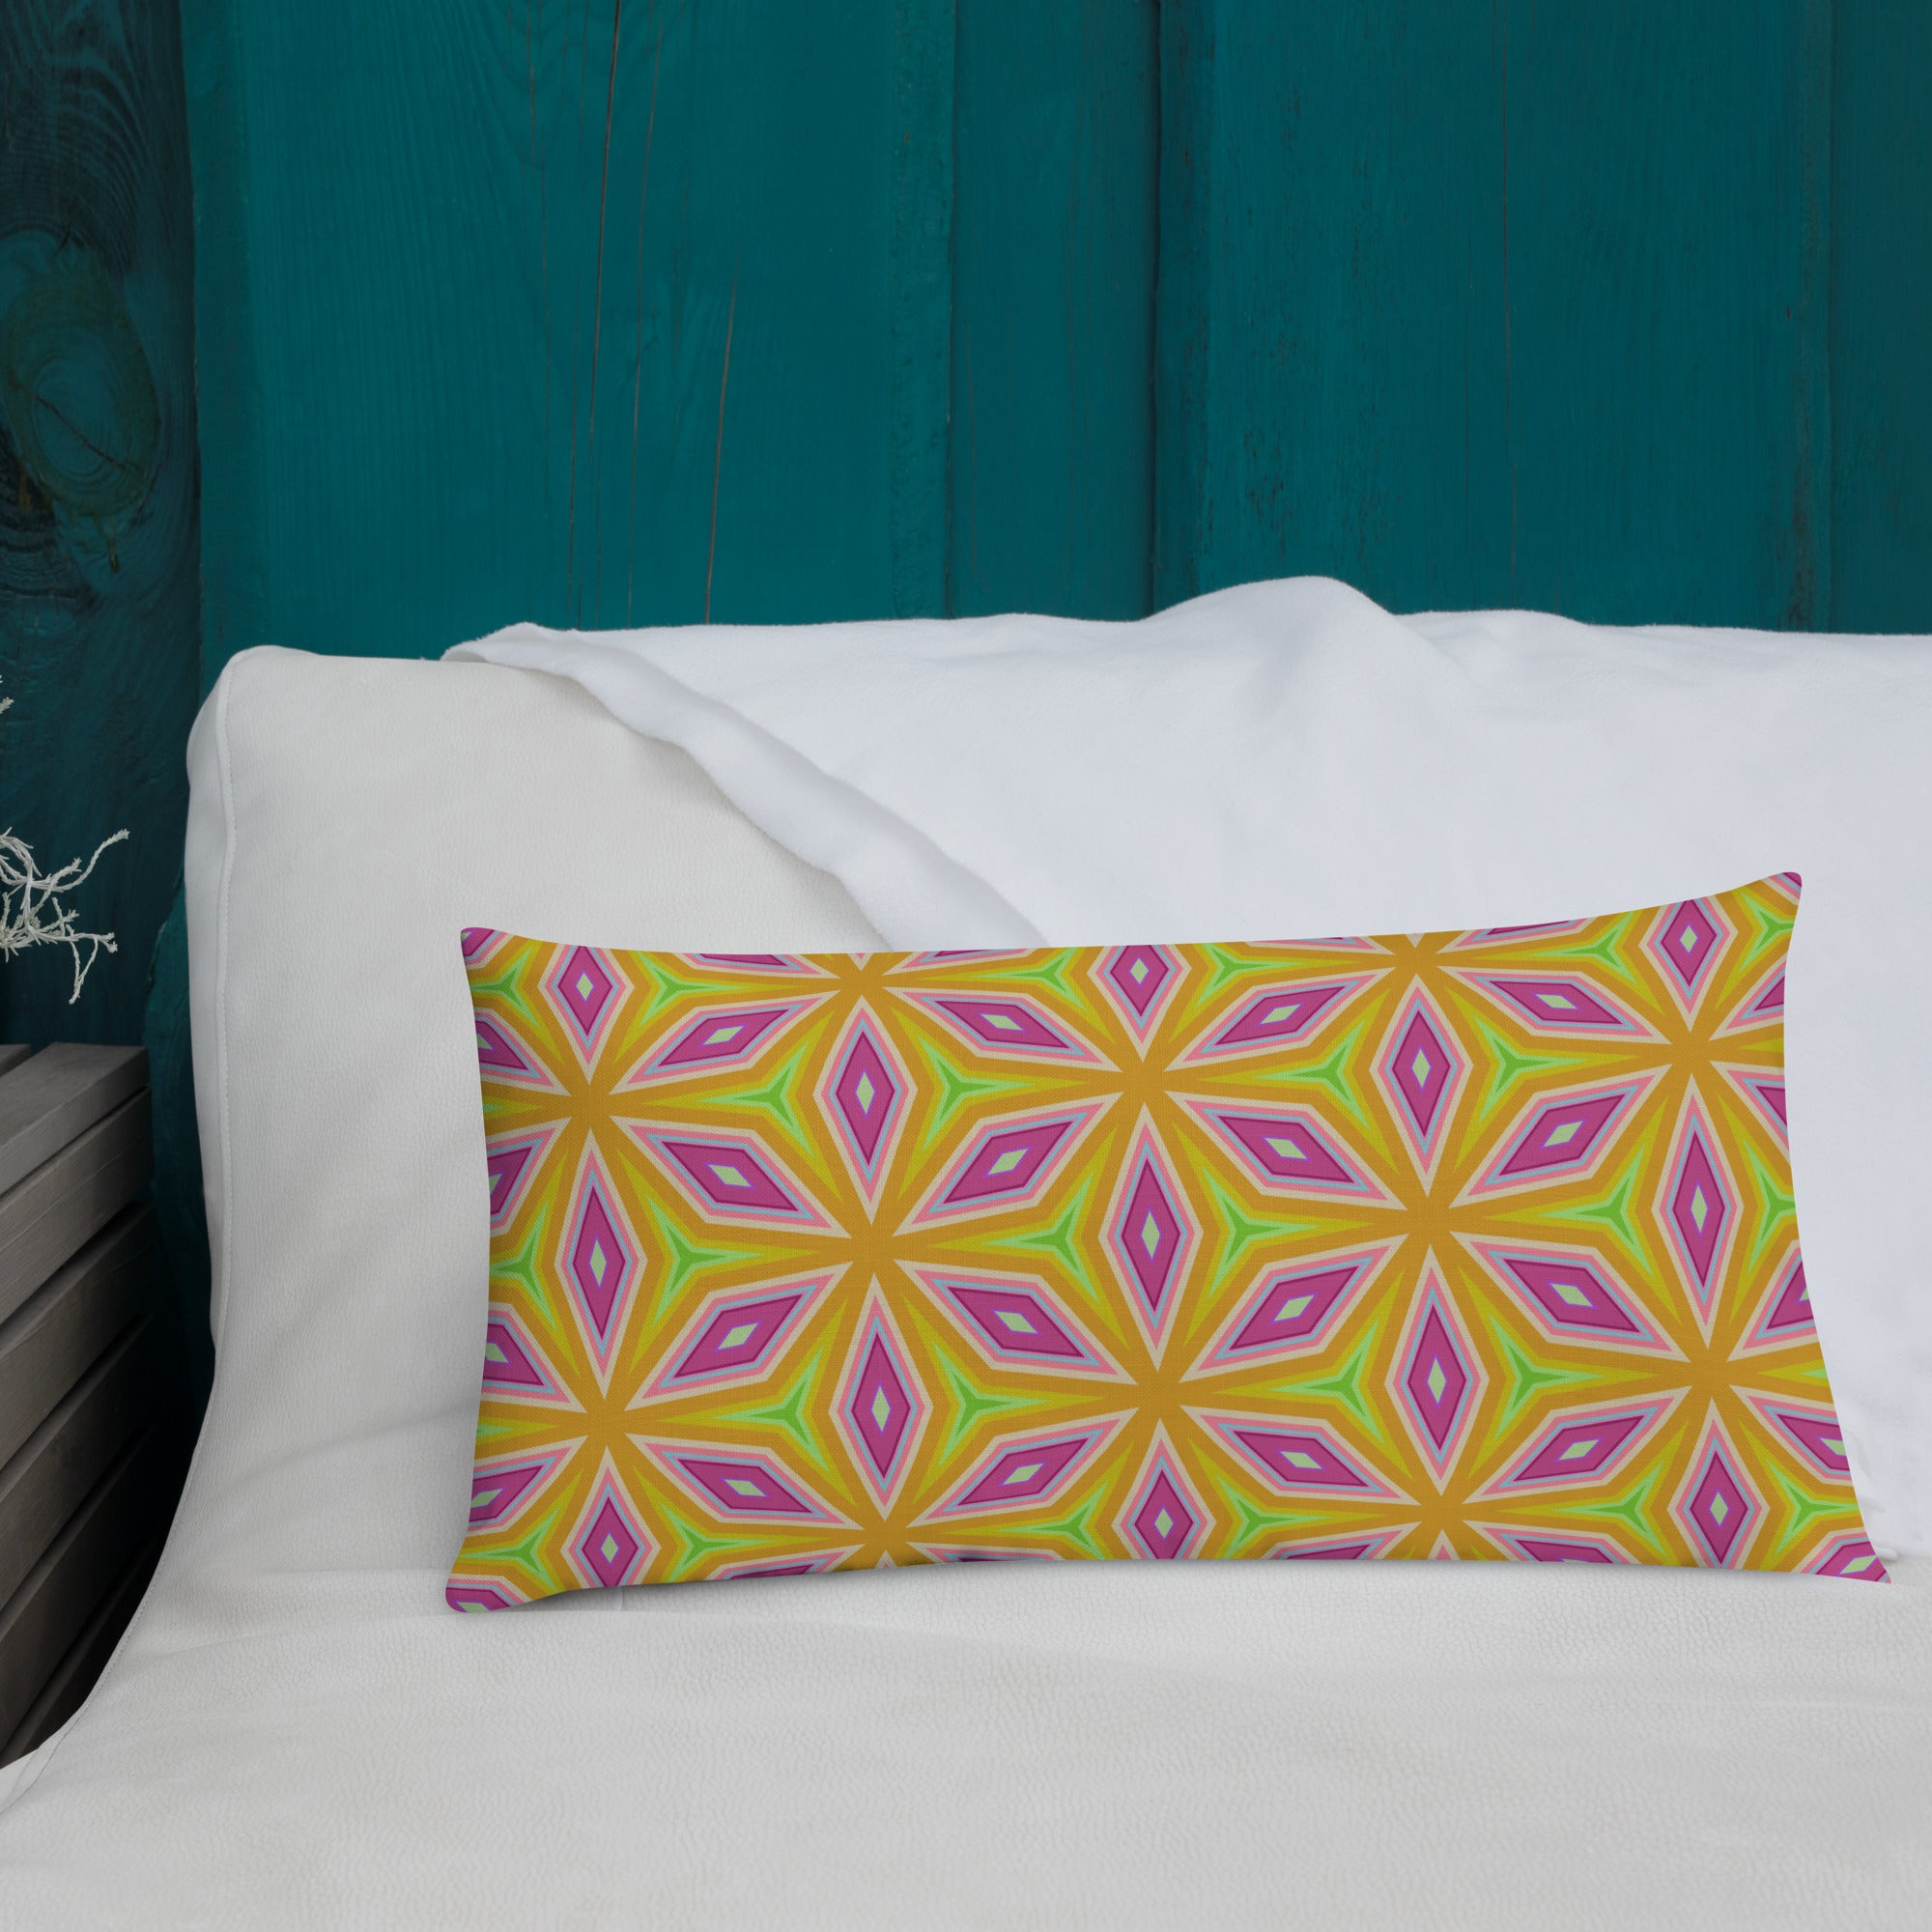 Modern Mosaic design on premium accent pillow for contemporary decor.